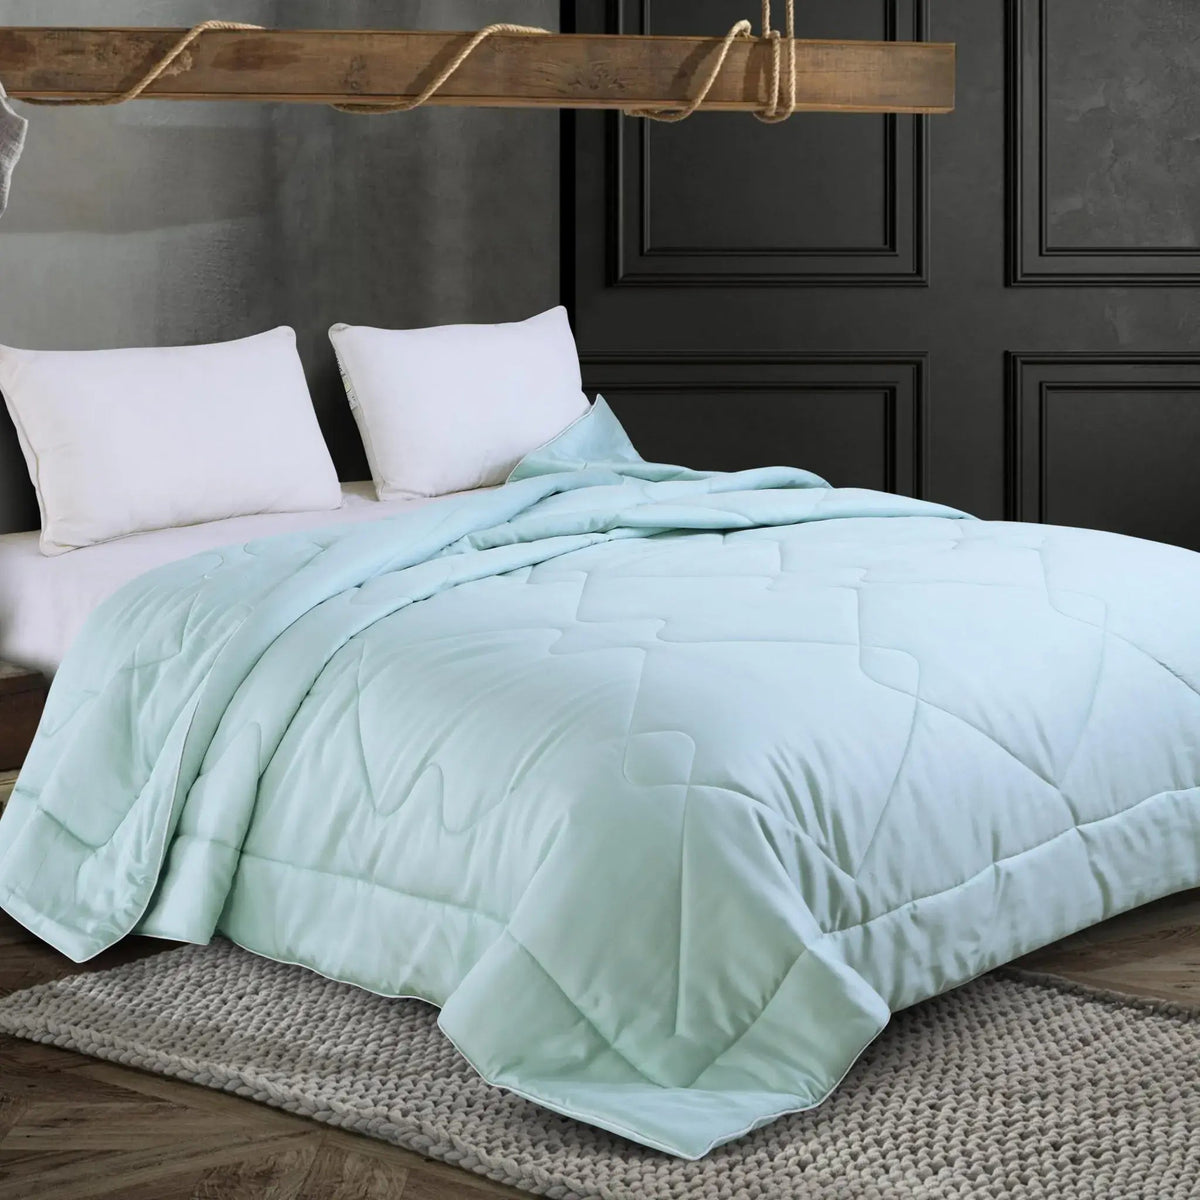 Malako Summer Soft Gel Maya Blue 100% Bamboo Quilt/Comforter (200GSM) - MALAKO